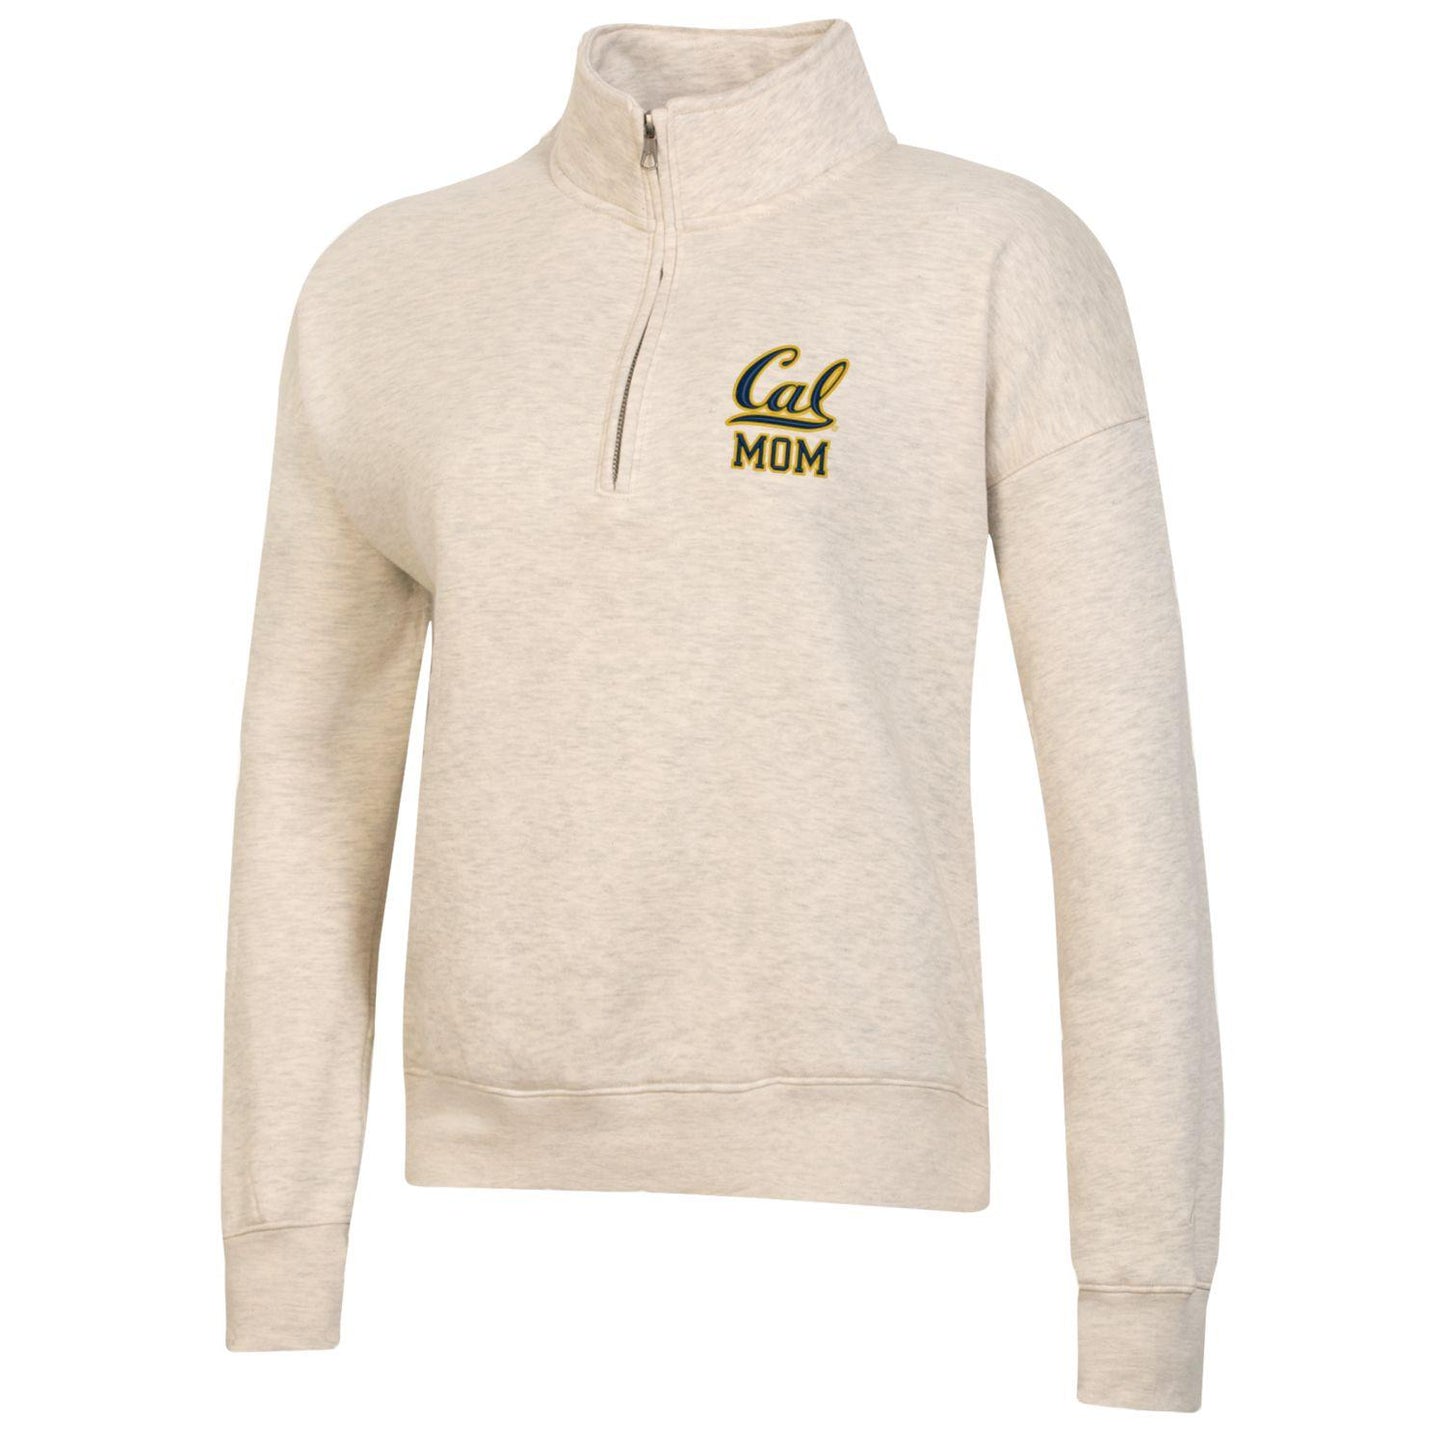 U.C. Berkeley Cal Mom embroidered Big Cotton women's 1/4 Zip sweatshirt-Oatmeal-Shop College Wear